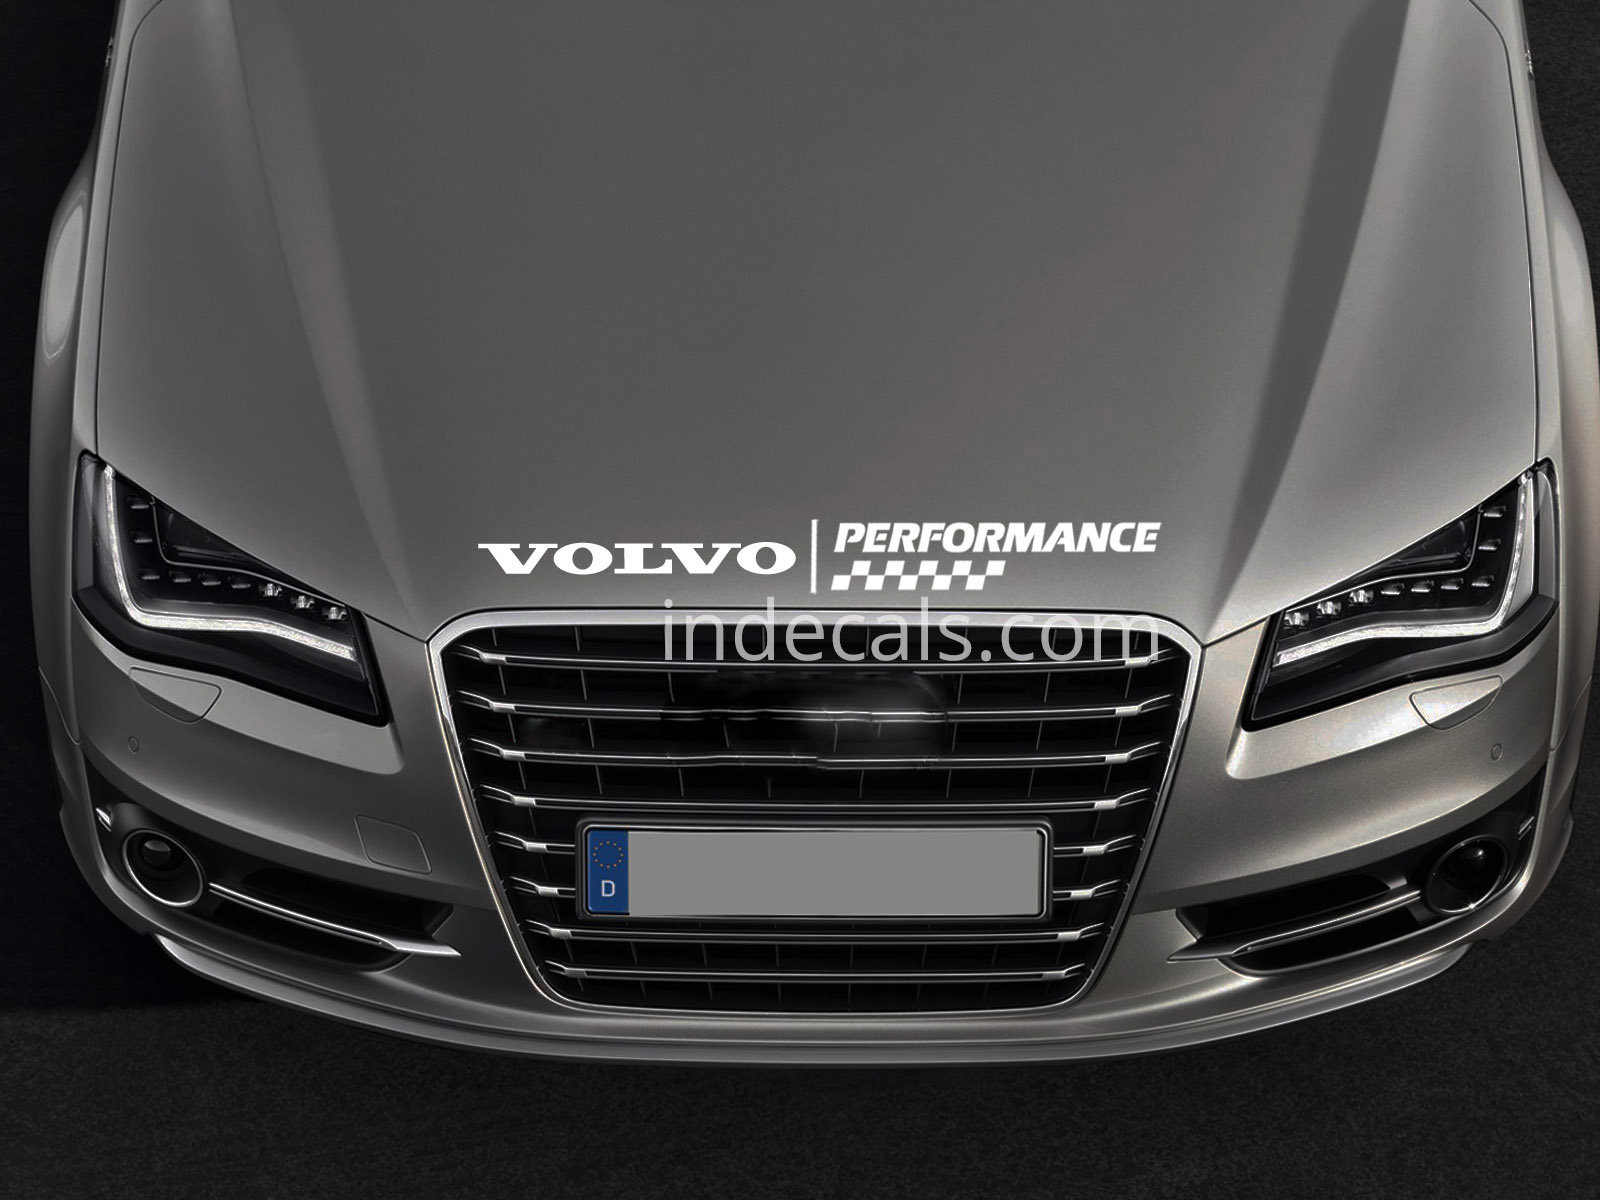 1 x Volvo Peformance Sticker for Bonnet - White